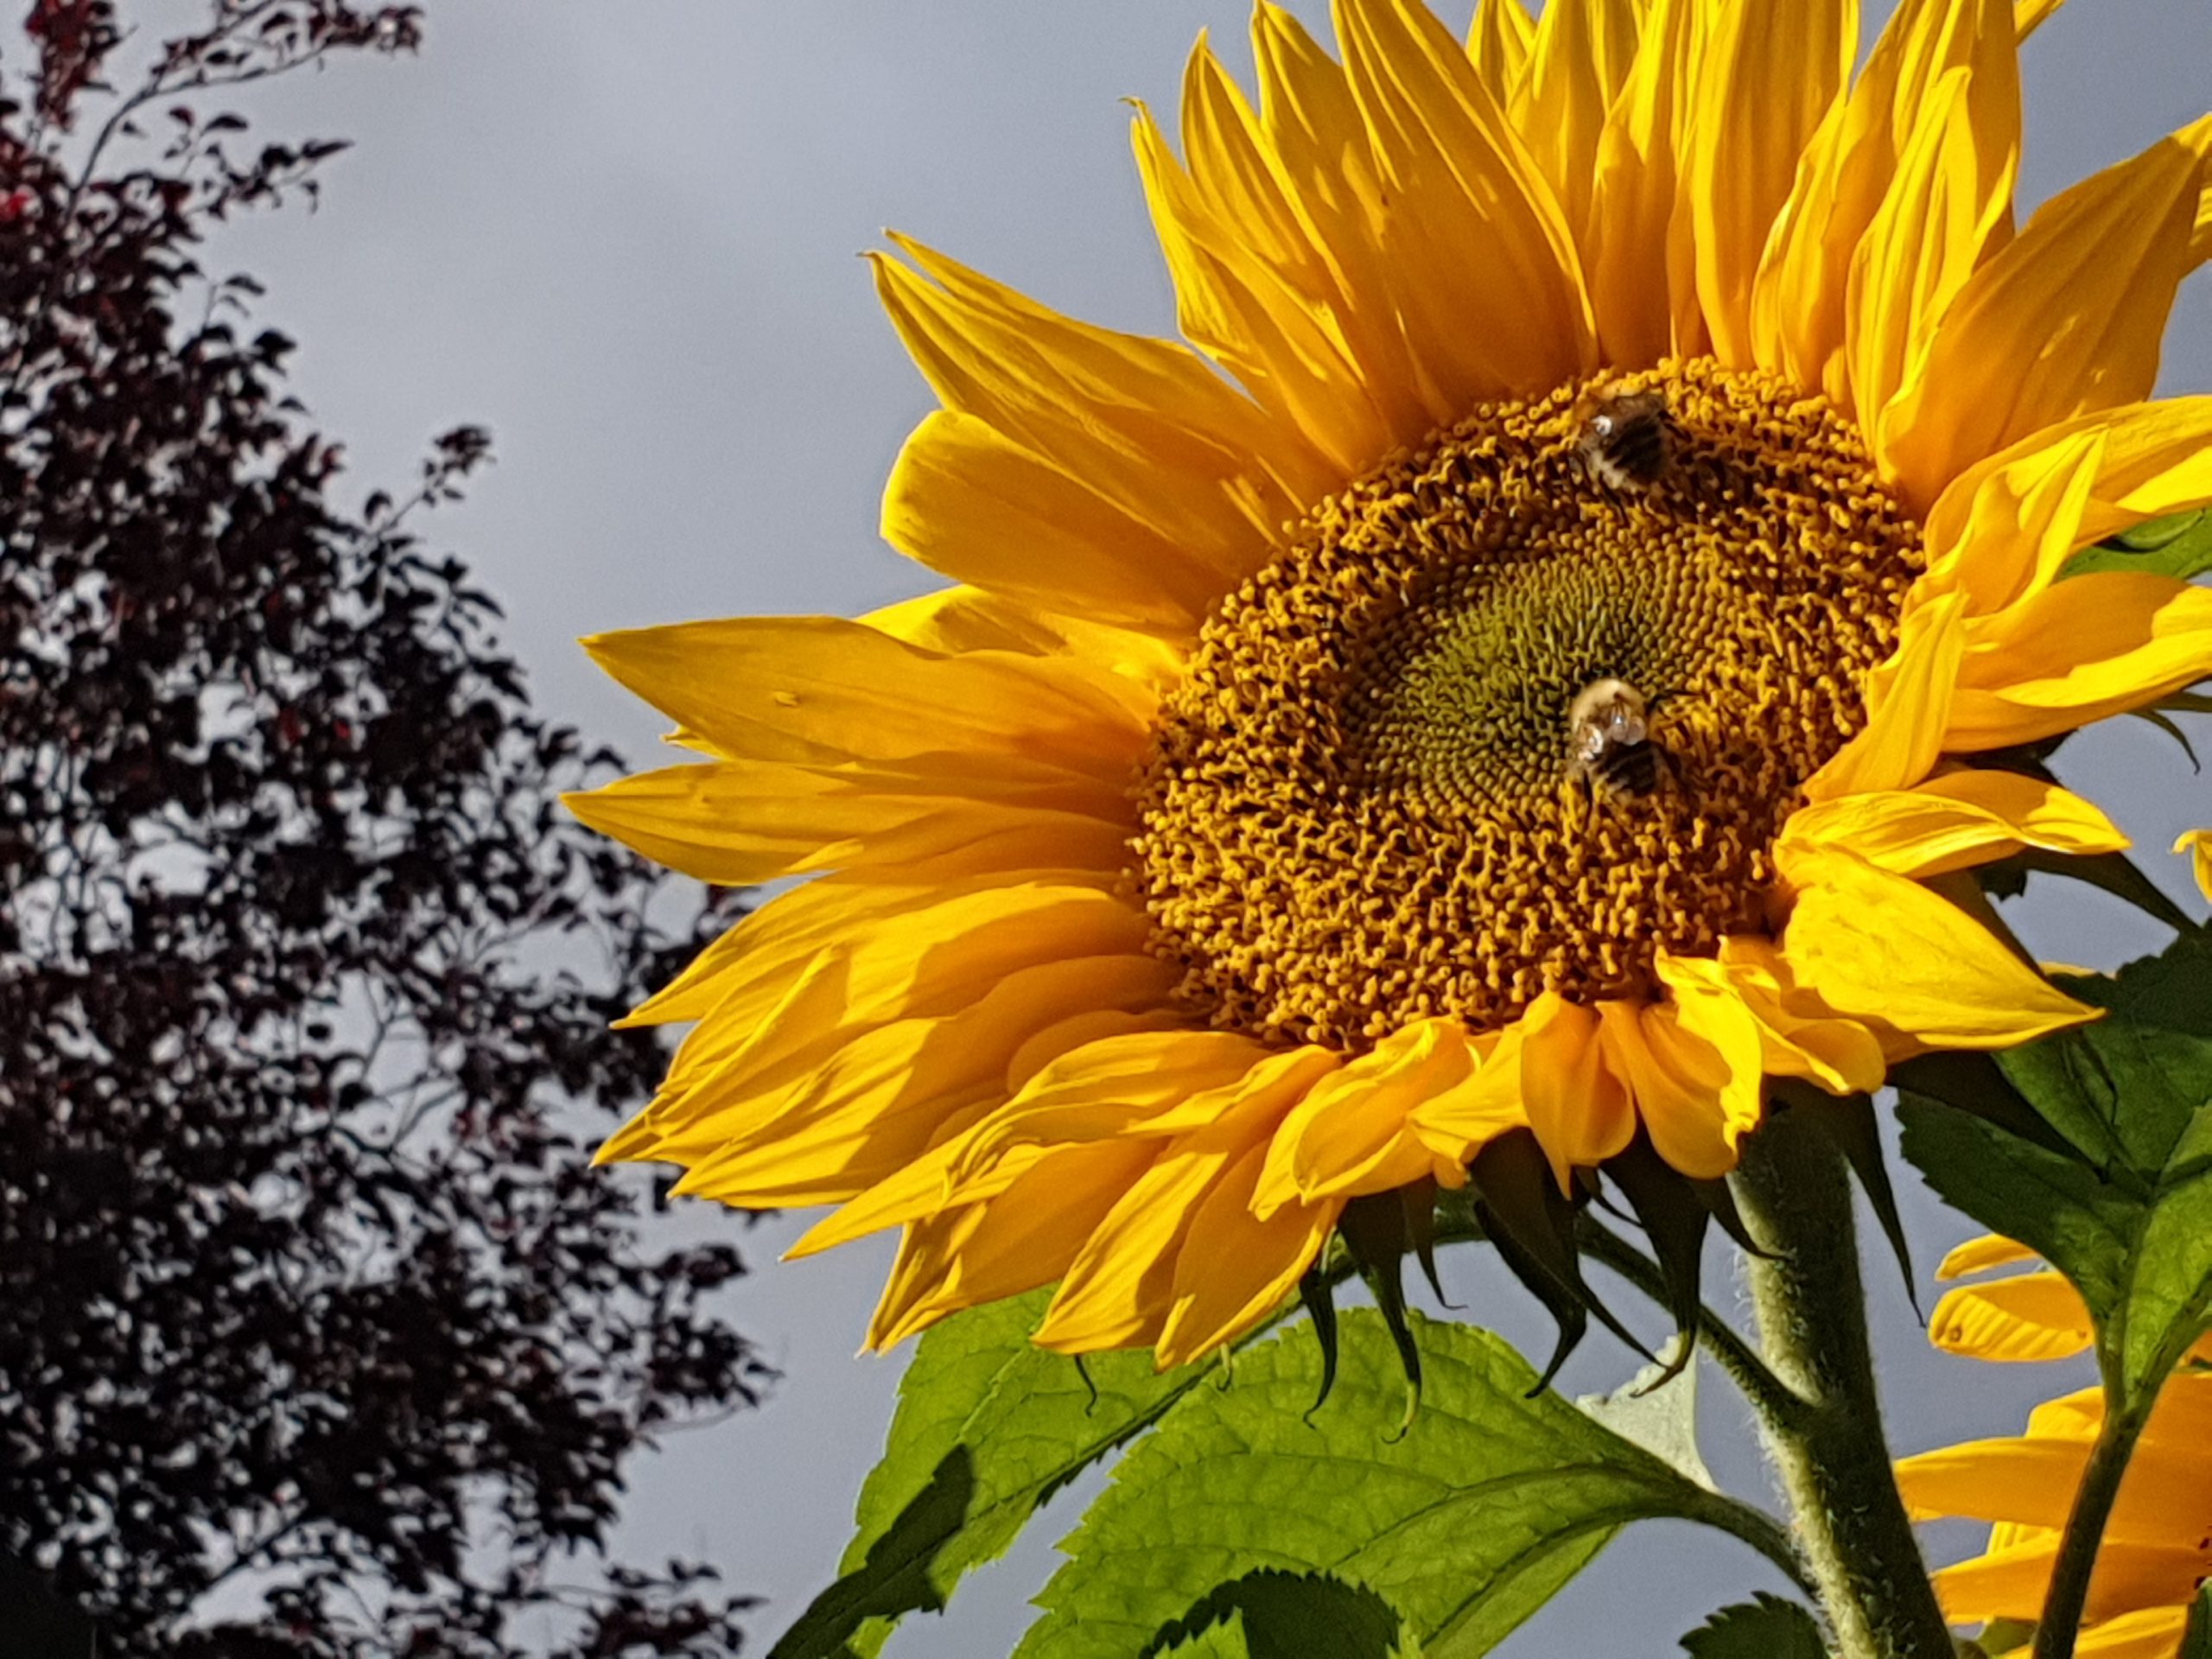 Sunflowers & sustainability